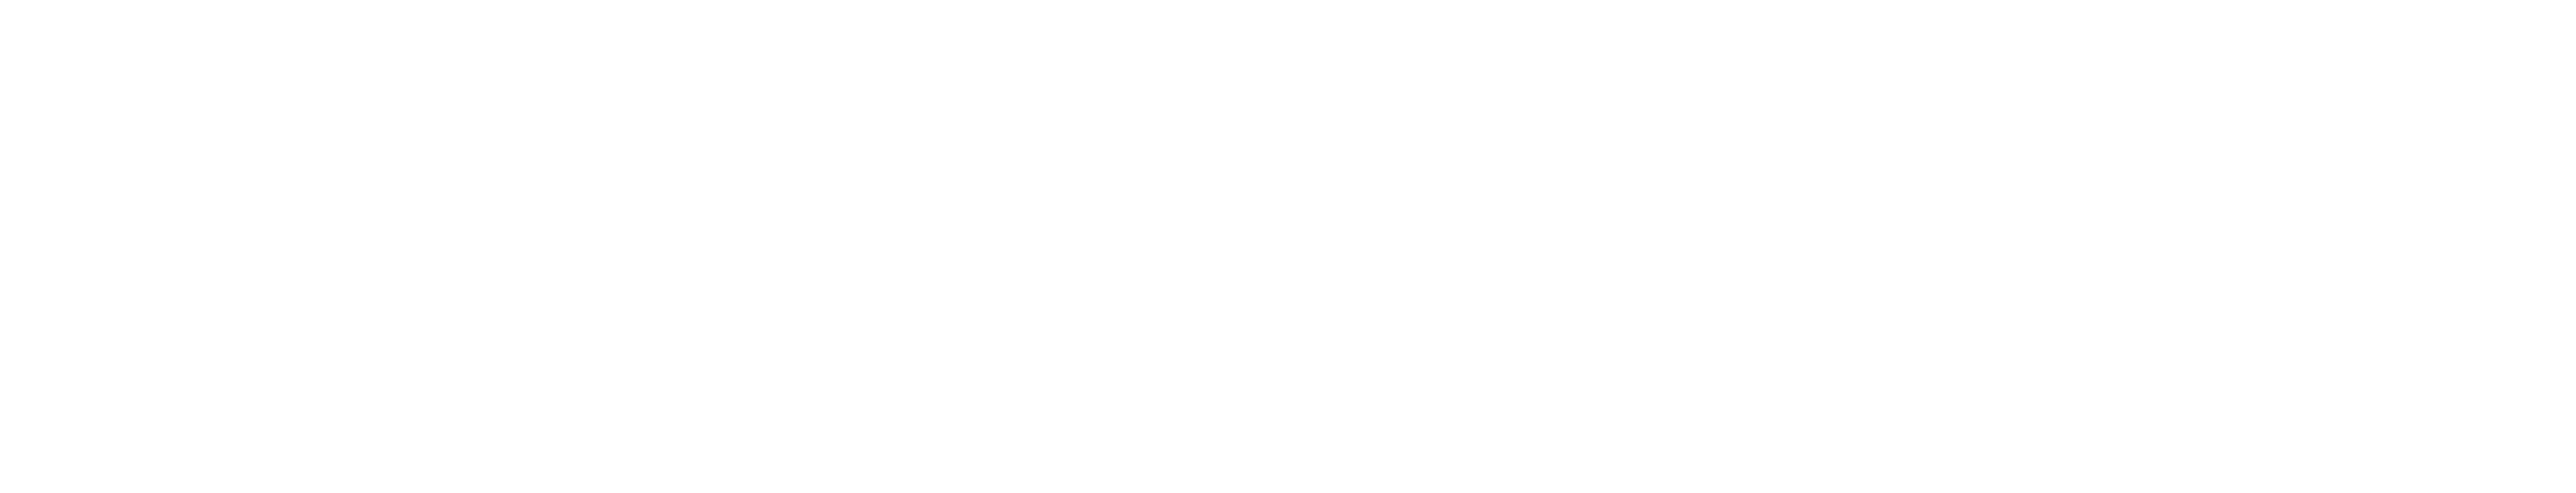 sm-flourish-logo